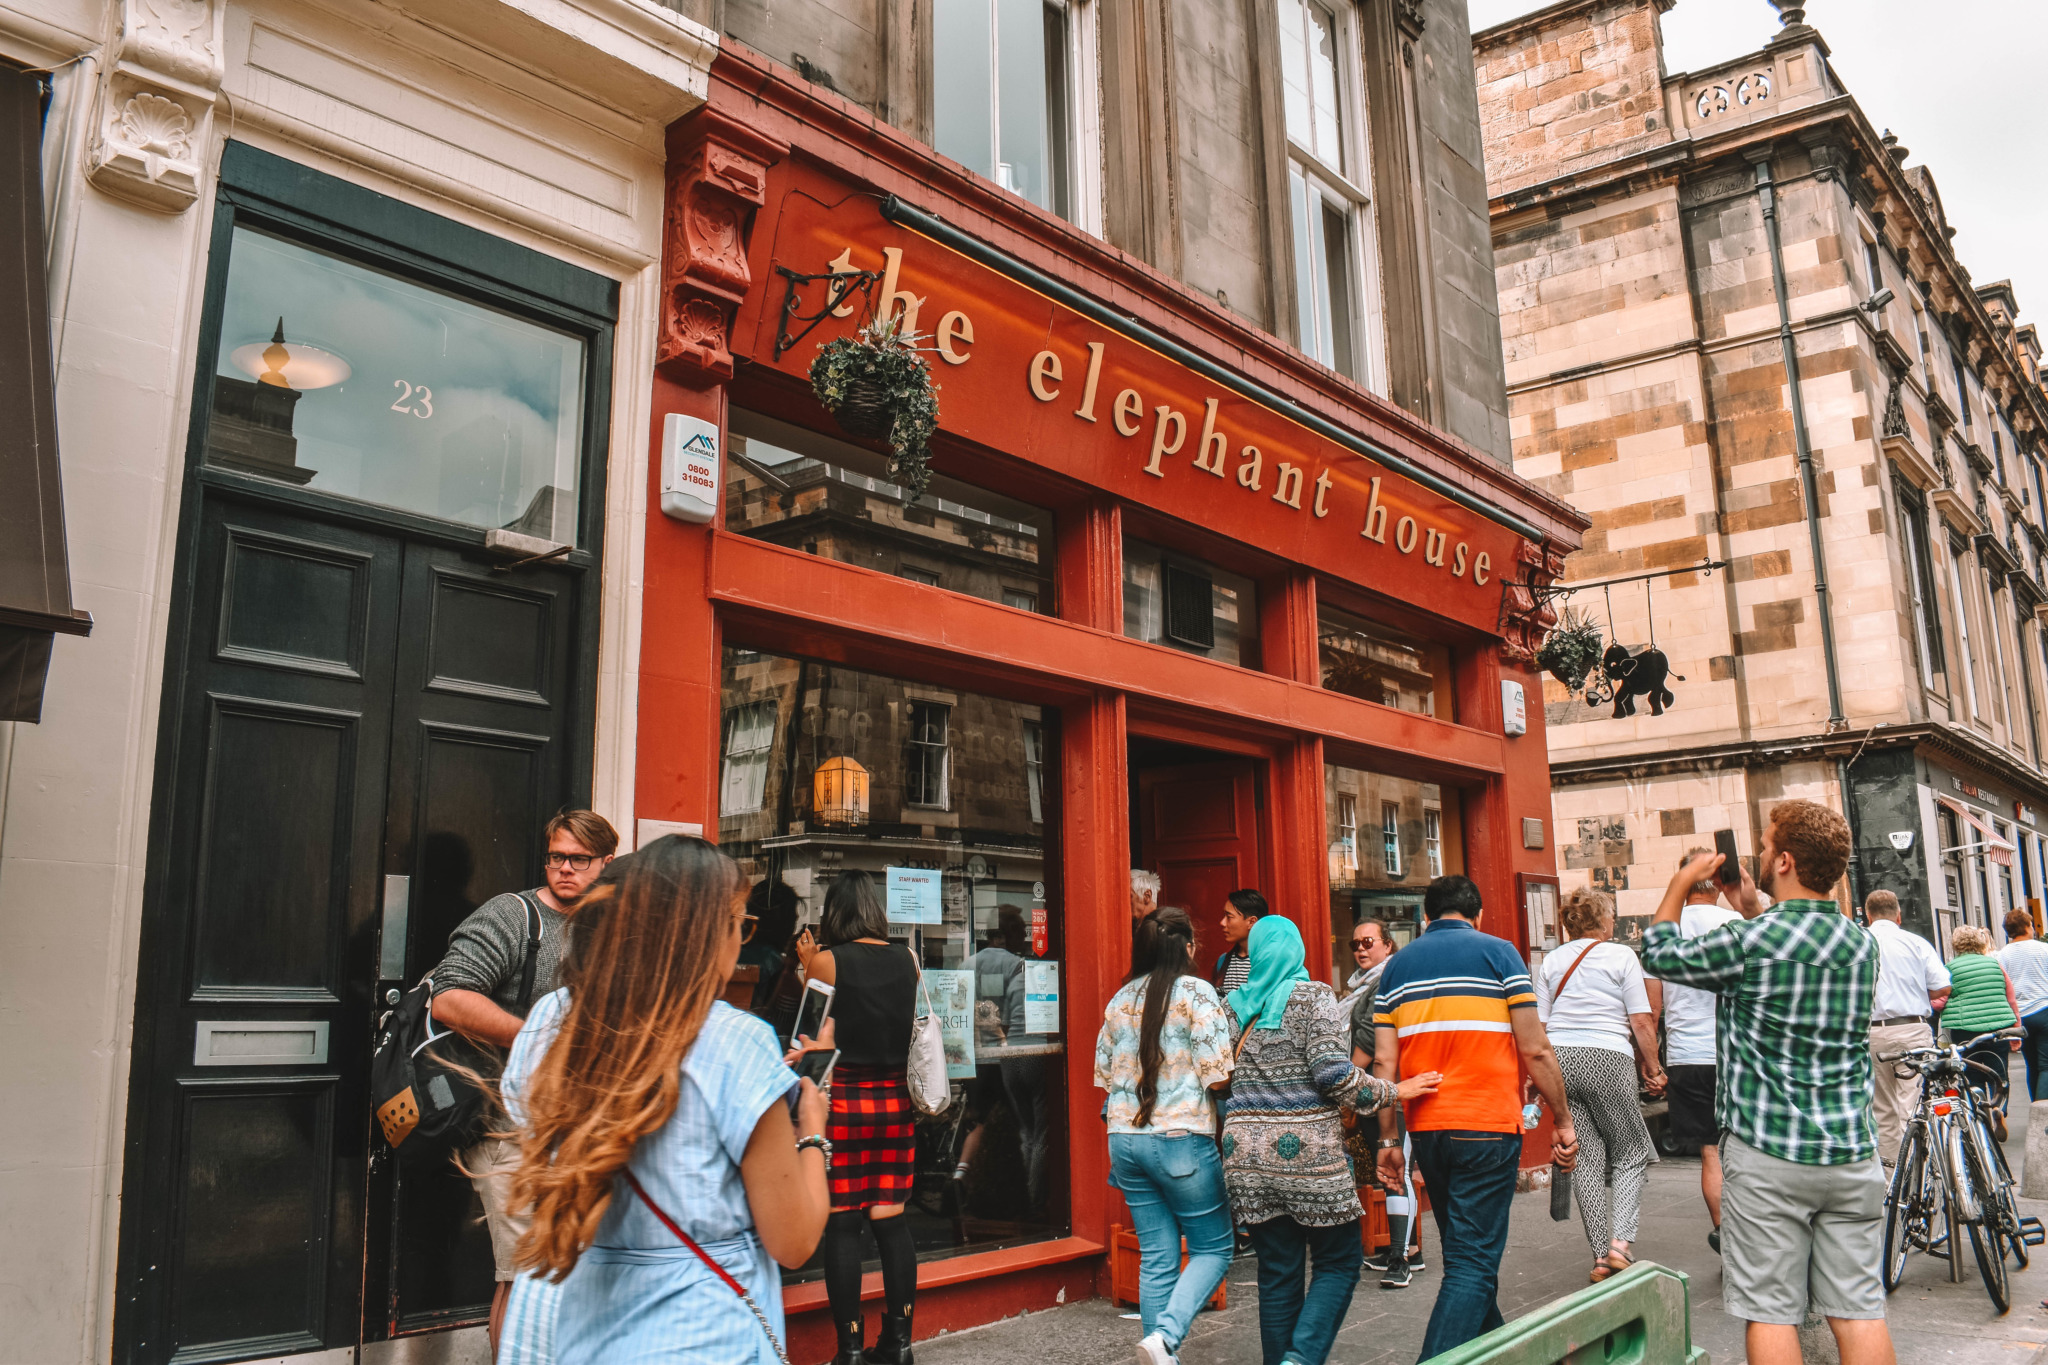 Elephant House in Edinburgh, Scotland where JK Rowling wrote Harry Potter